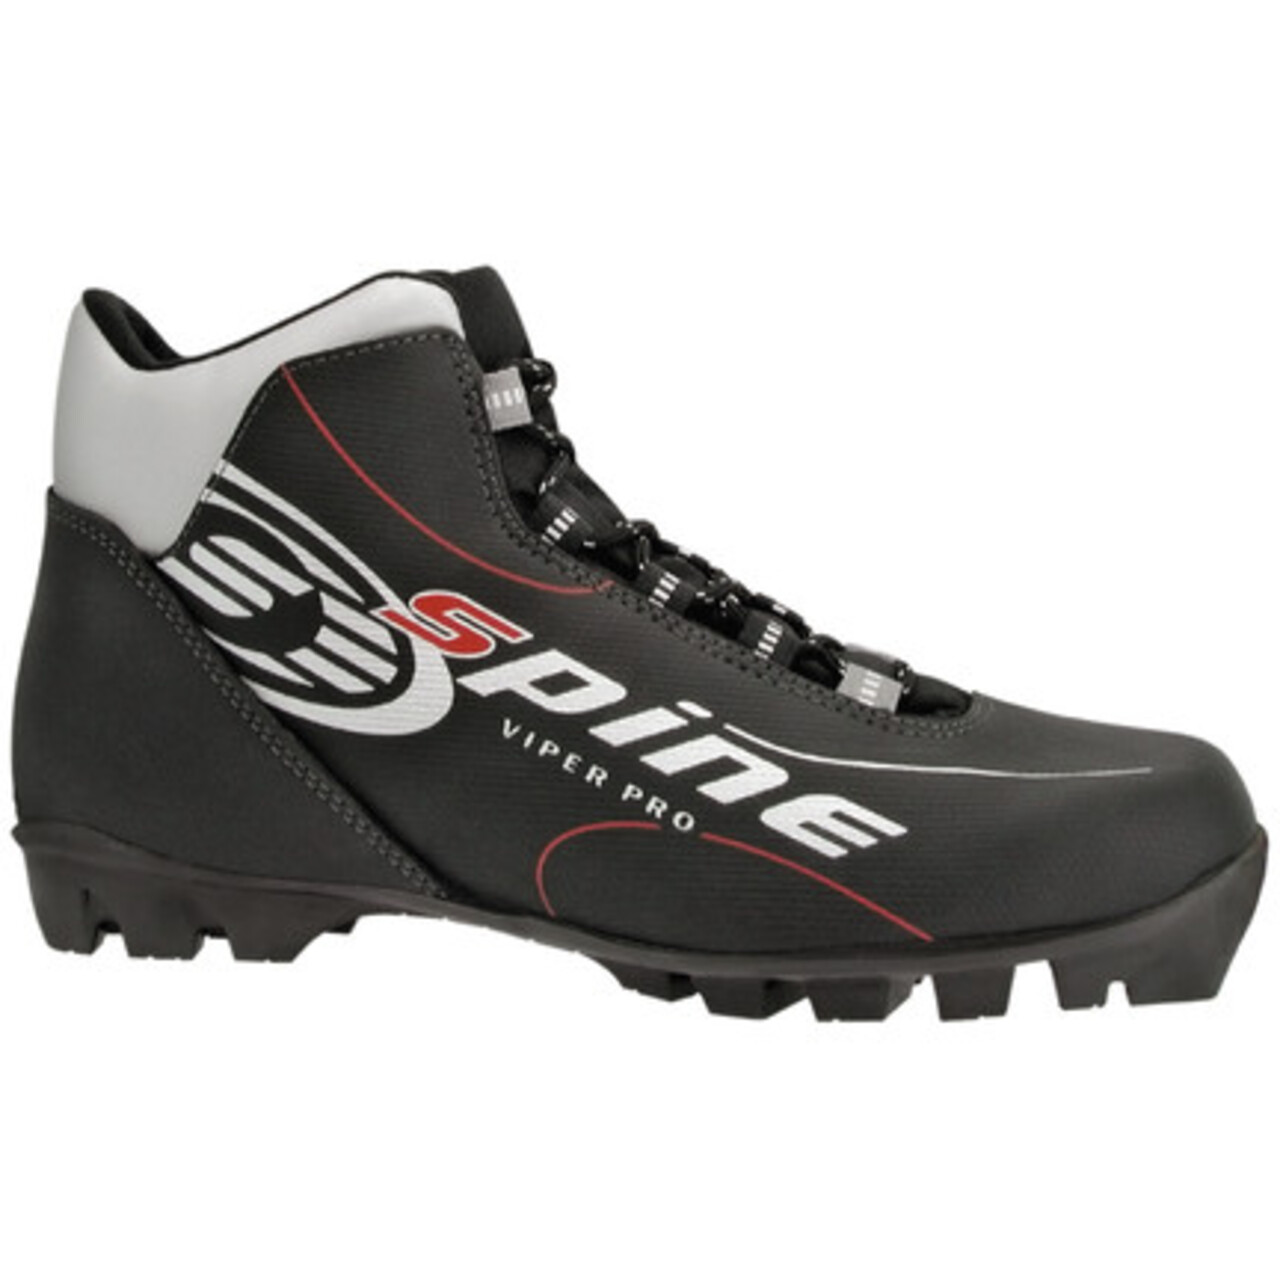 Ботинки спайн купить. Ботинки лыжные NNN Spine Viper 251. Ботинки для беговых лыж Spine Viper 252. Ботинки Spine NNN. Ботинки лыжные Viper 452 SNS.